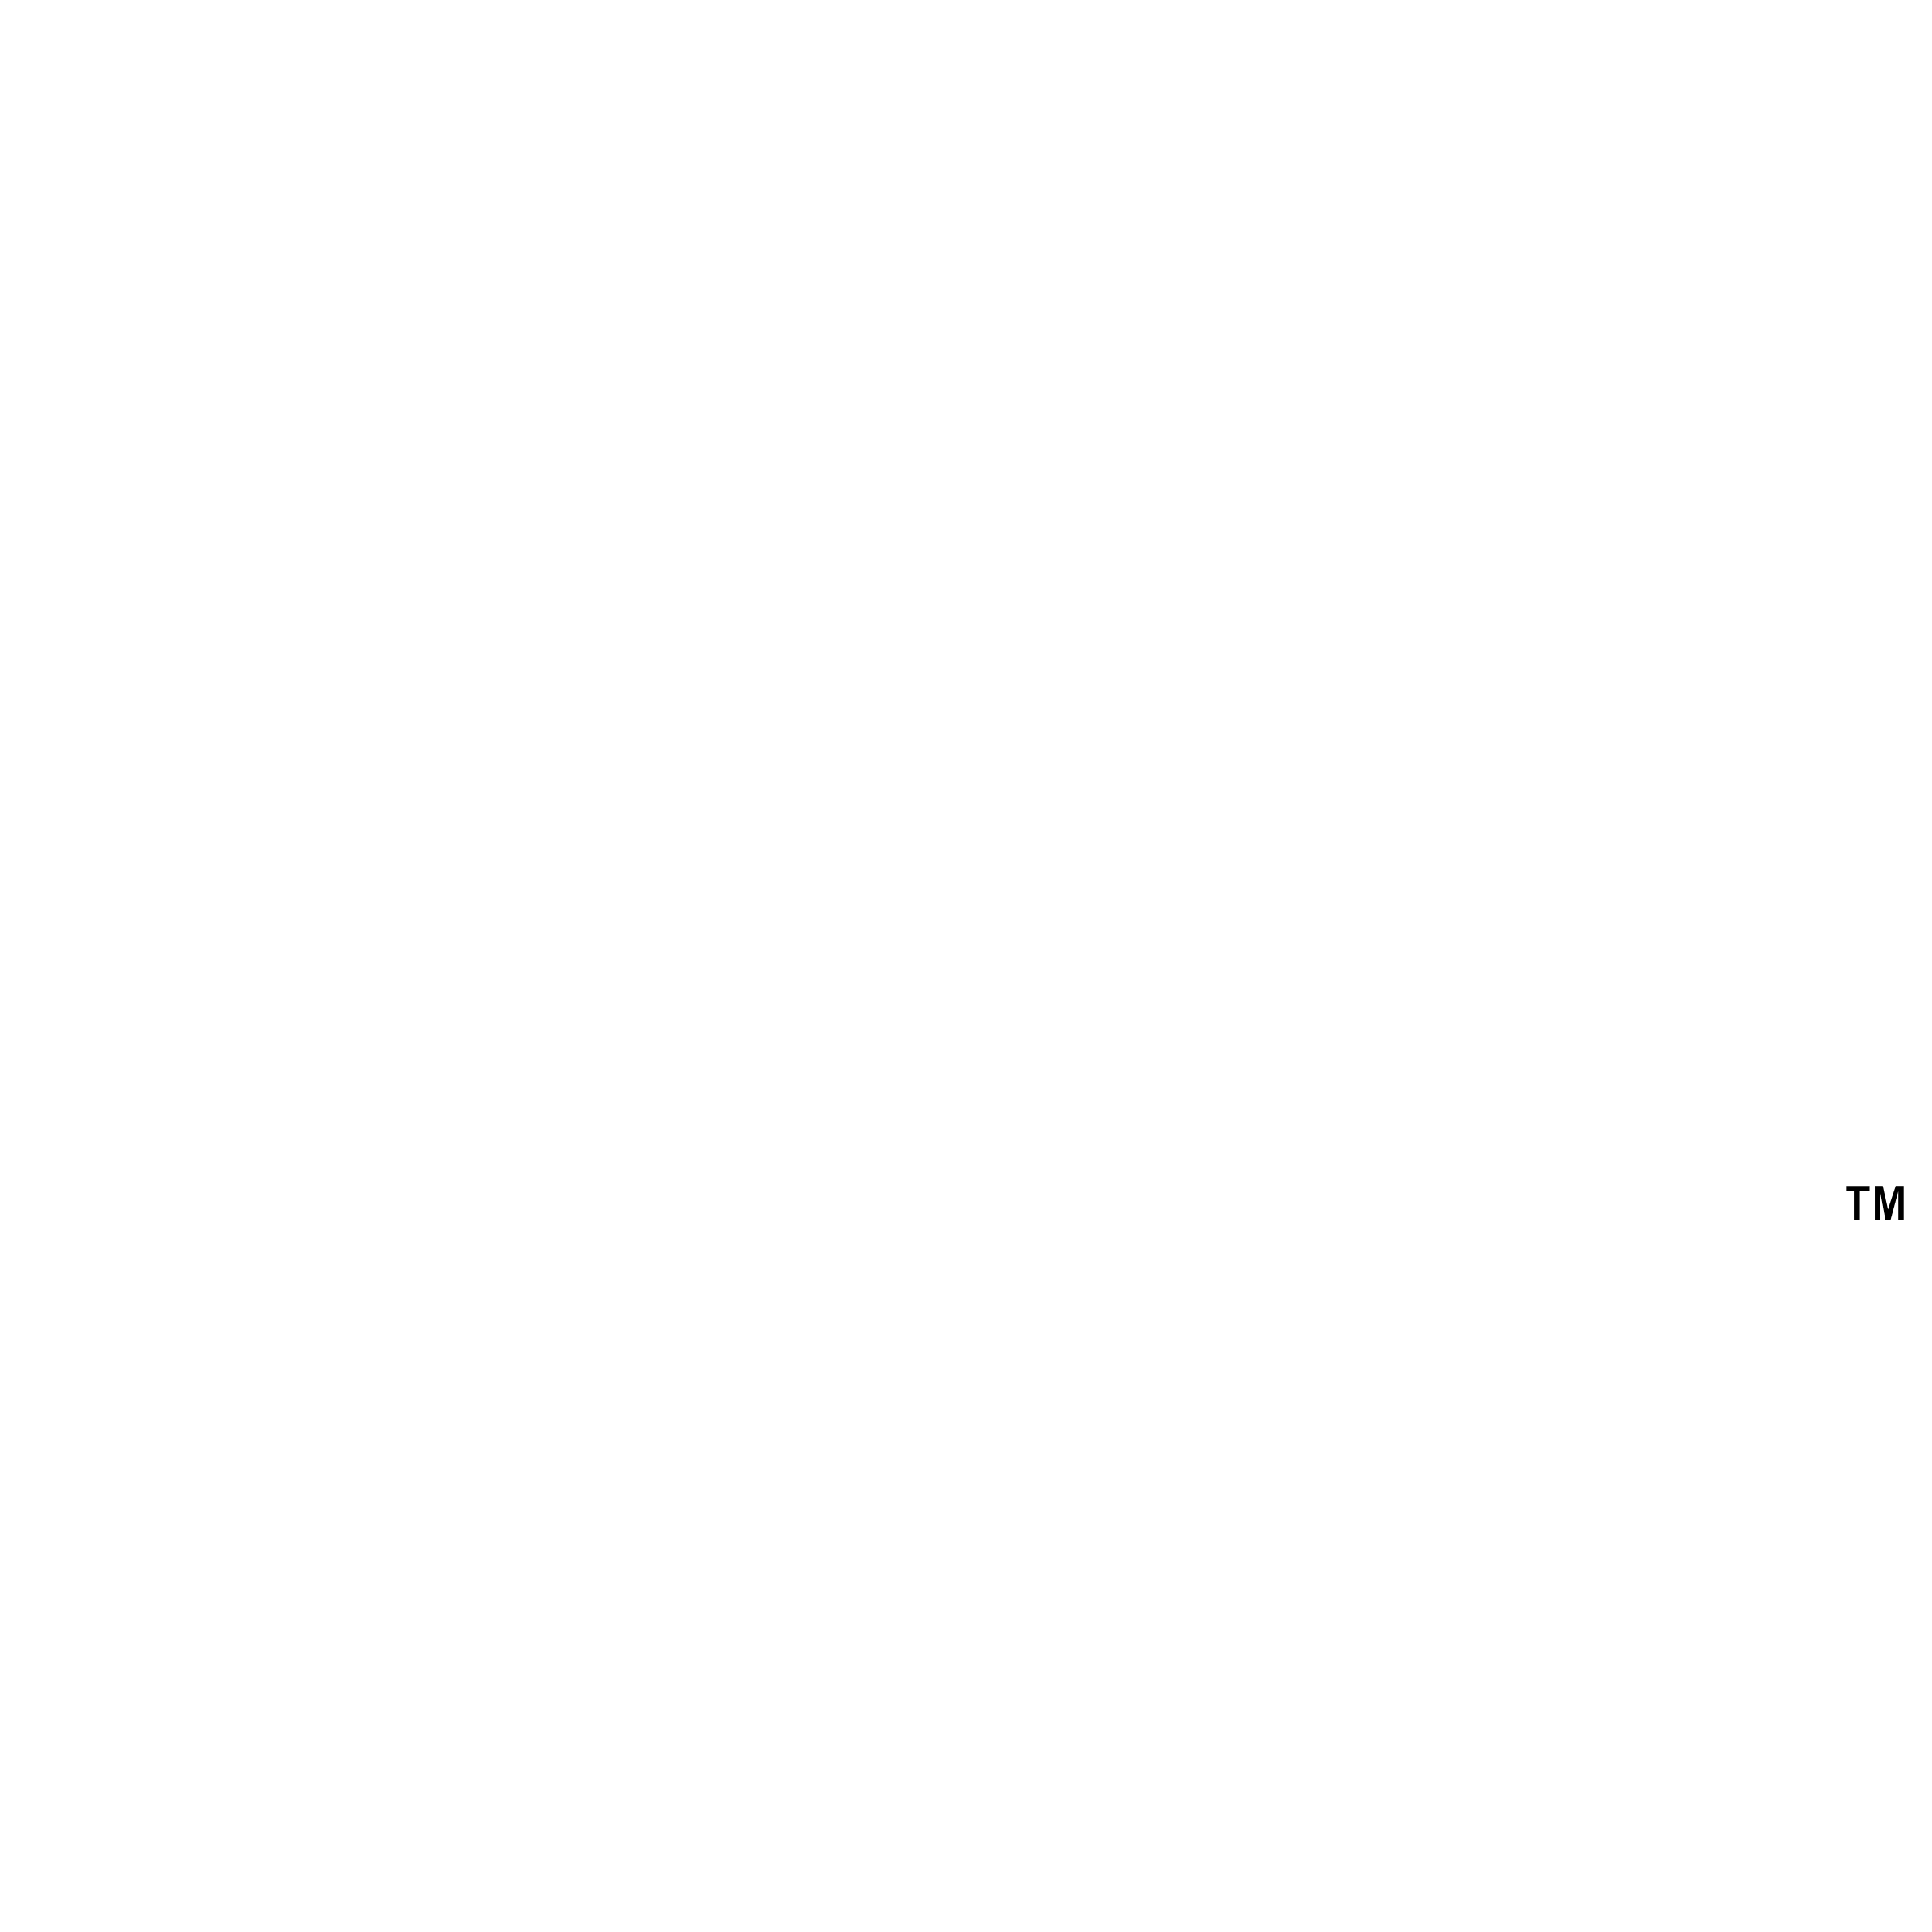 Airgas Logo - Airgas Logo PNG Transparent & SVG Vector - Freebie Supply